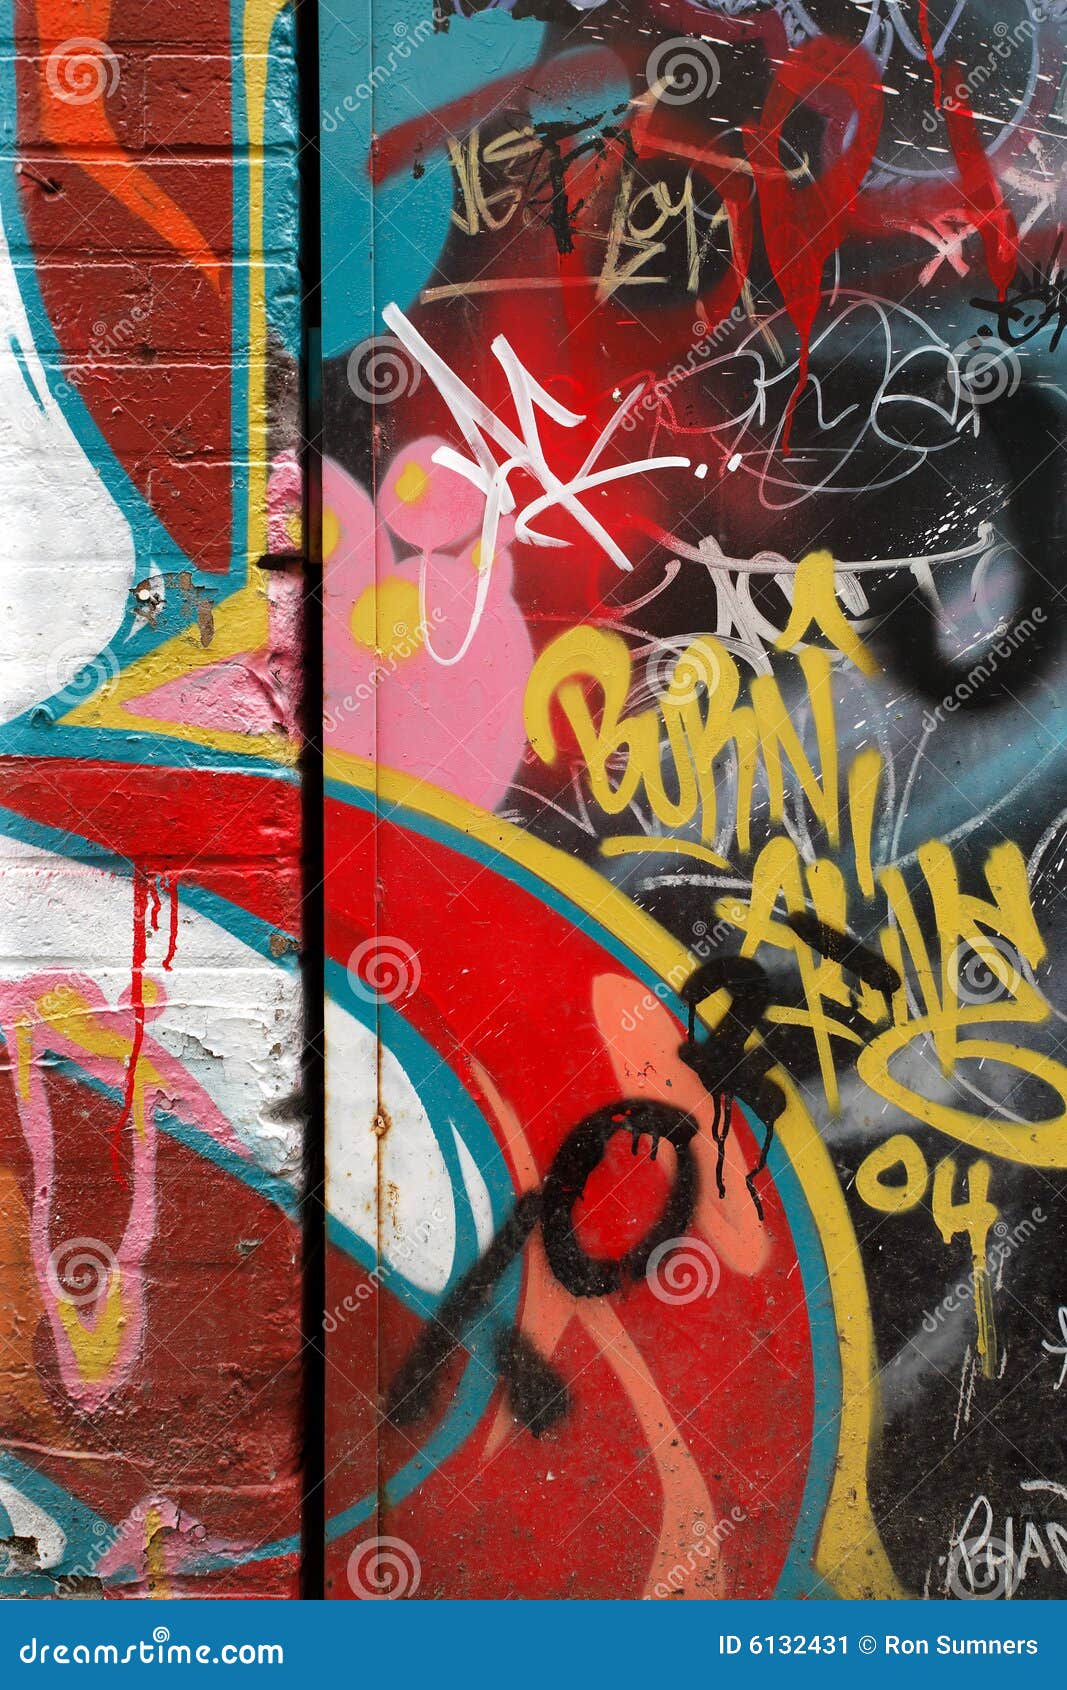 graffiti wall vandalism